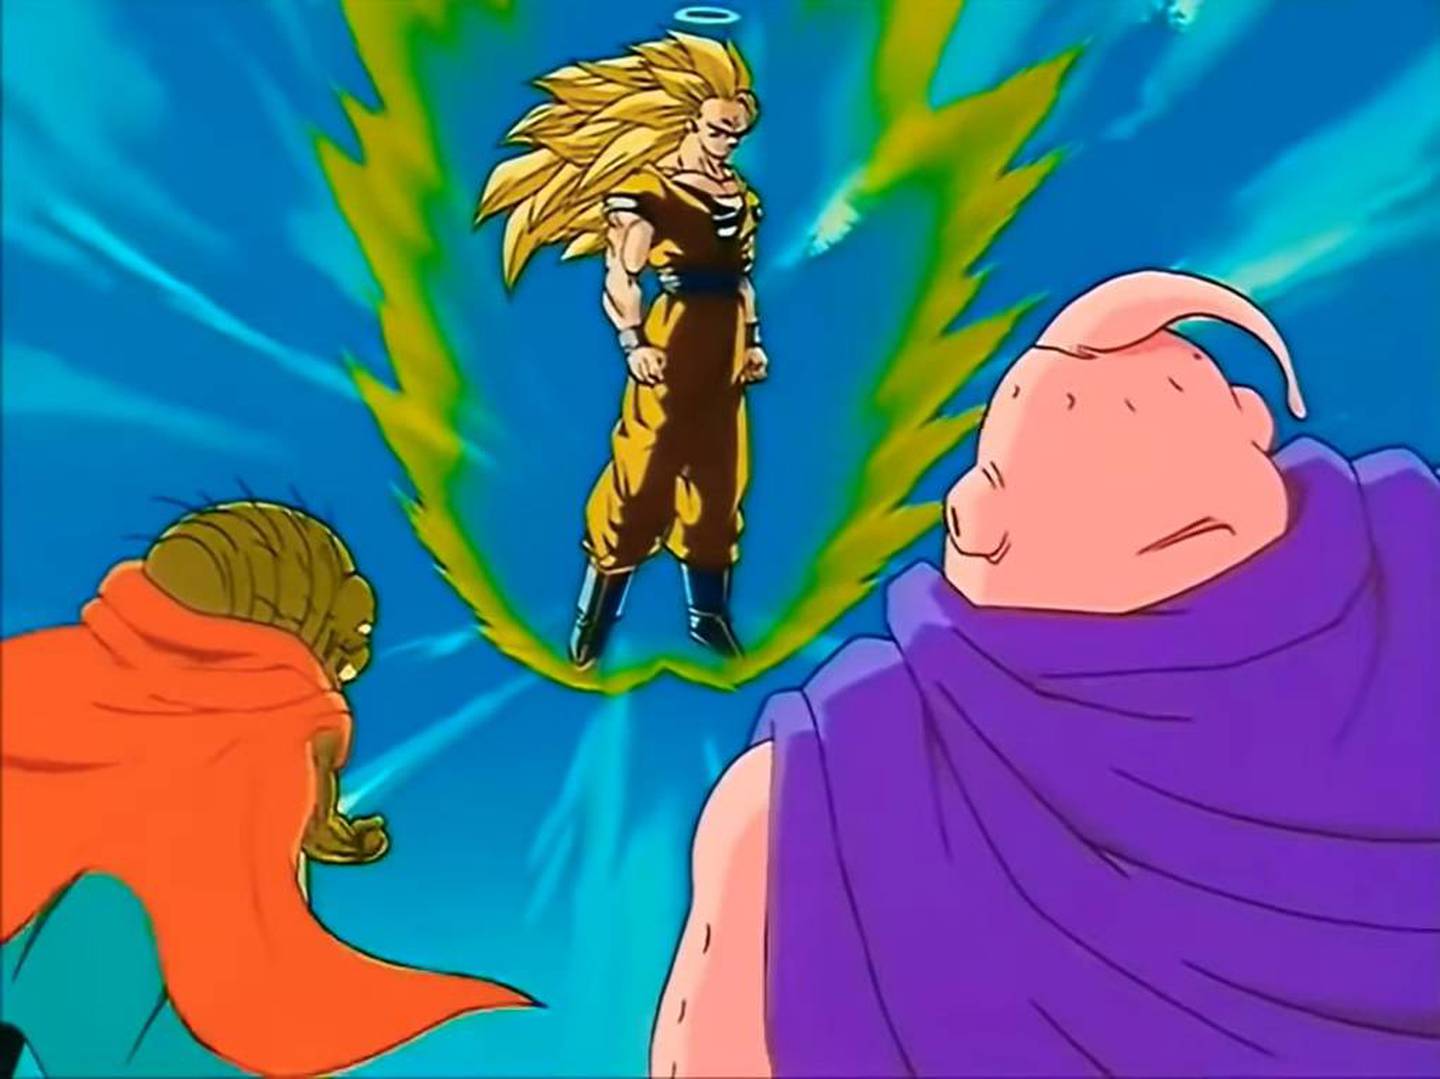 Dragon Ball Z: The reason why Goku stopped doing the Super Saiyan 3 transformation